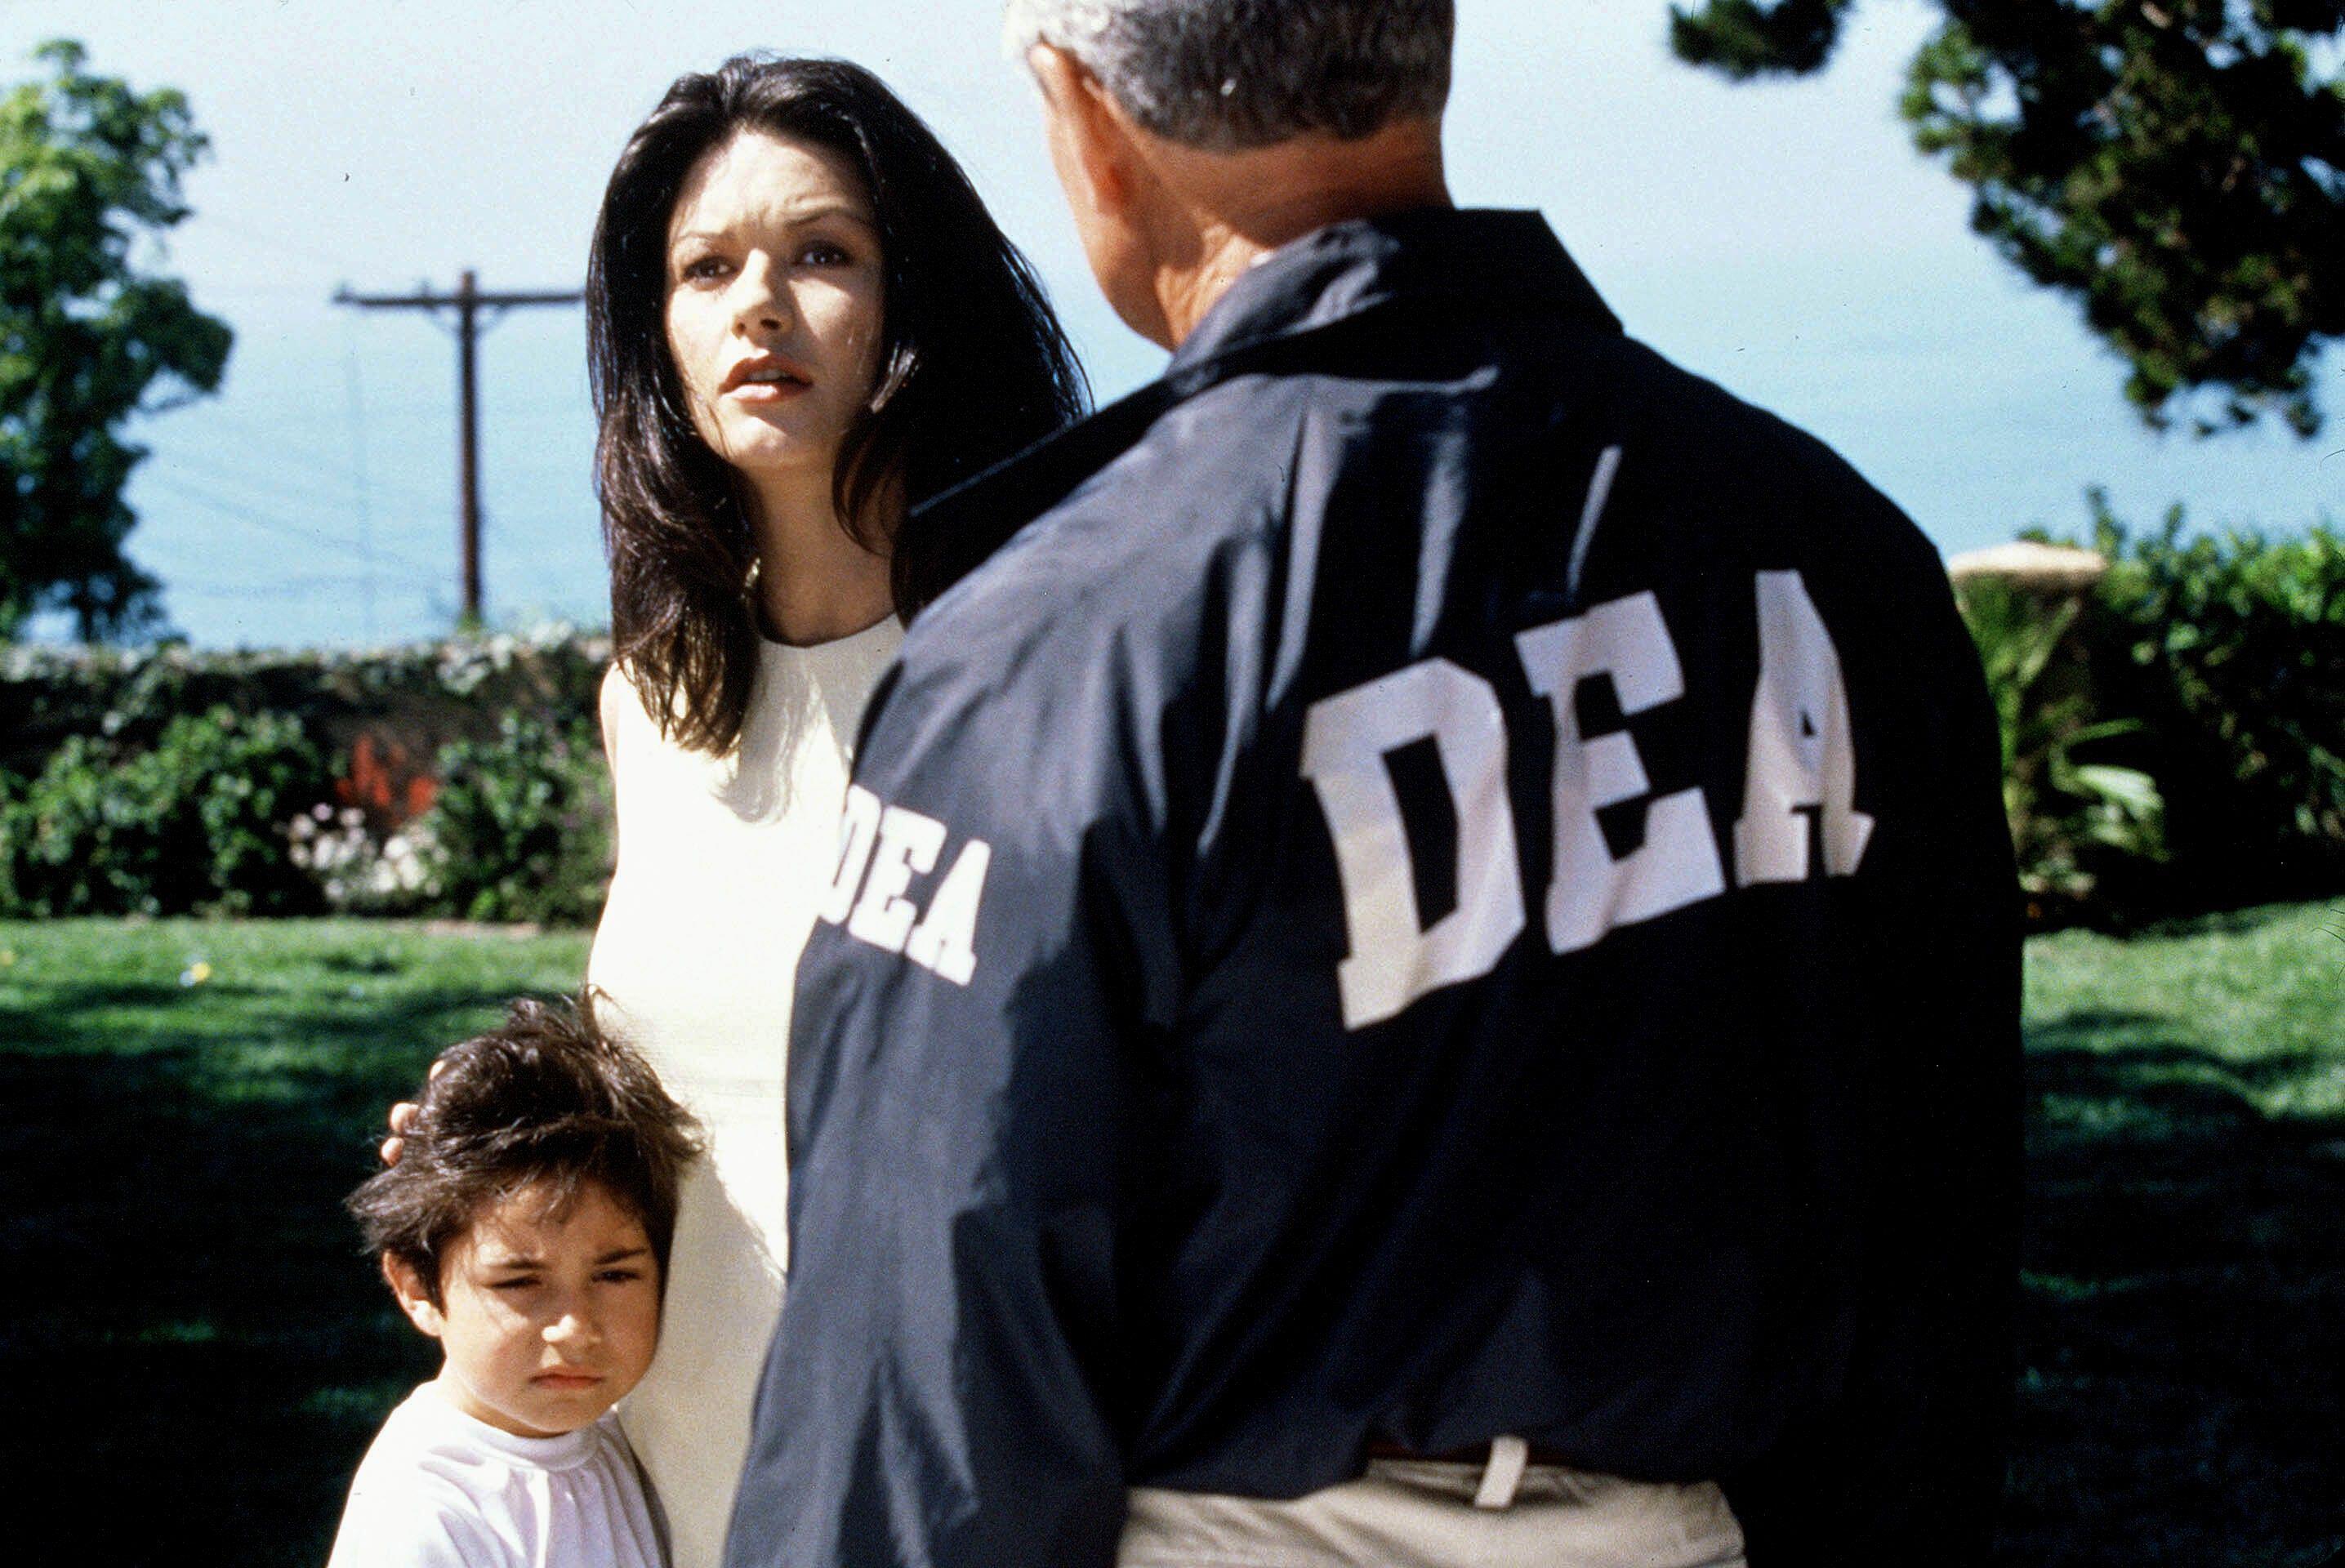 Catherine Zeta-Jones as Helena Ayala, restrained by DEA agents in Traffic